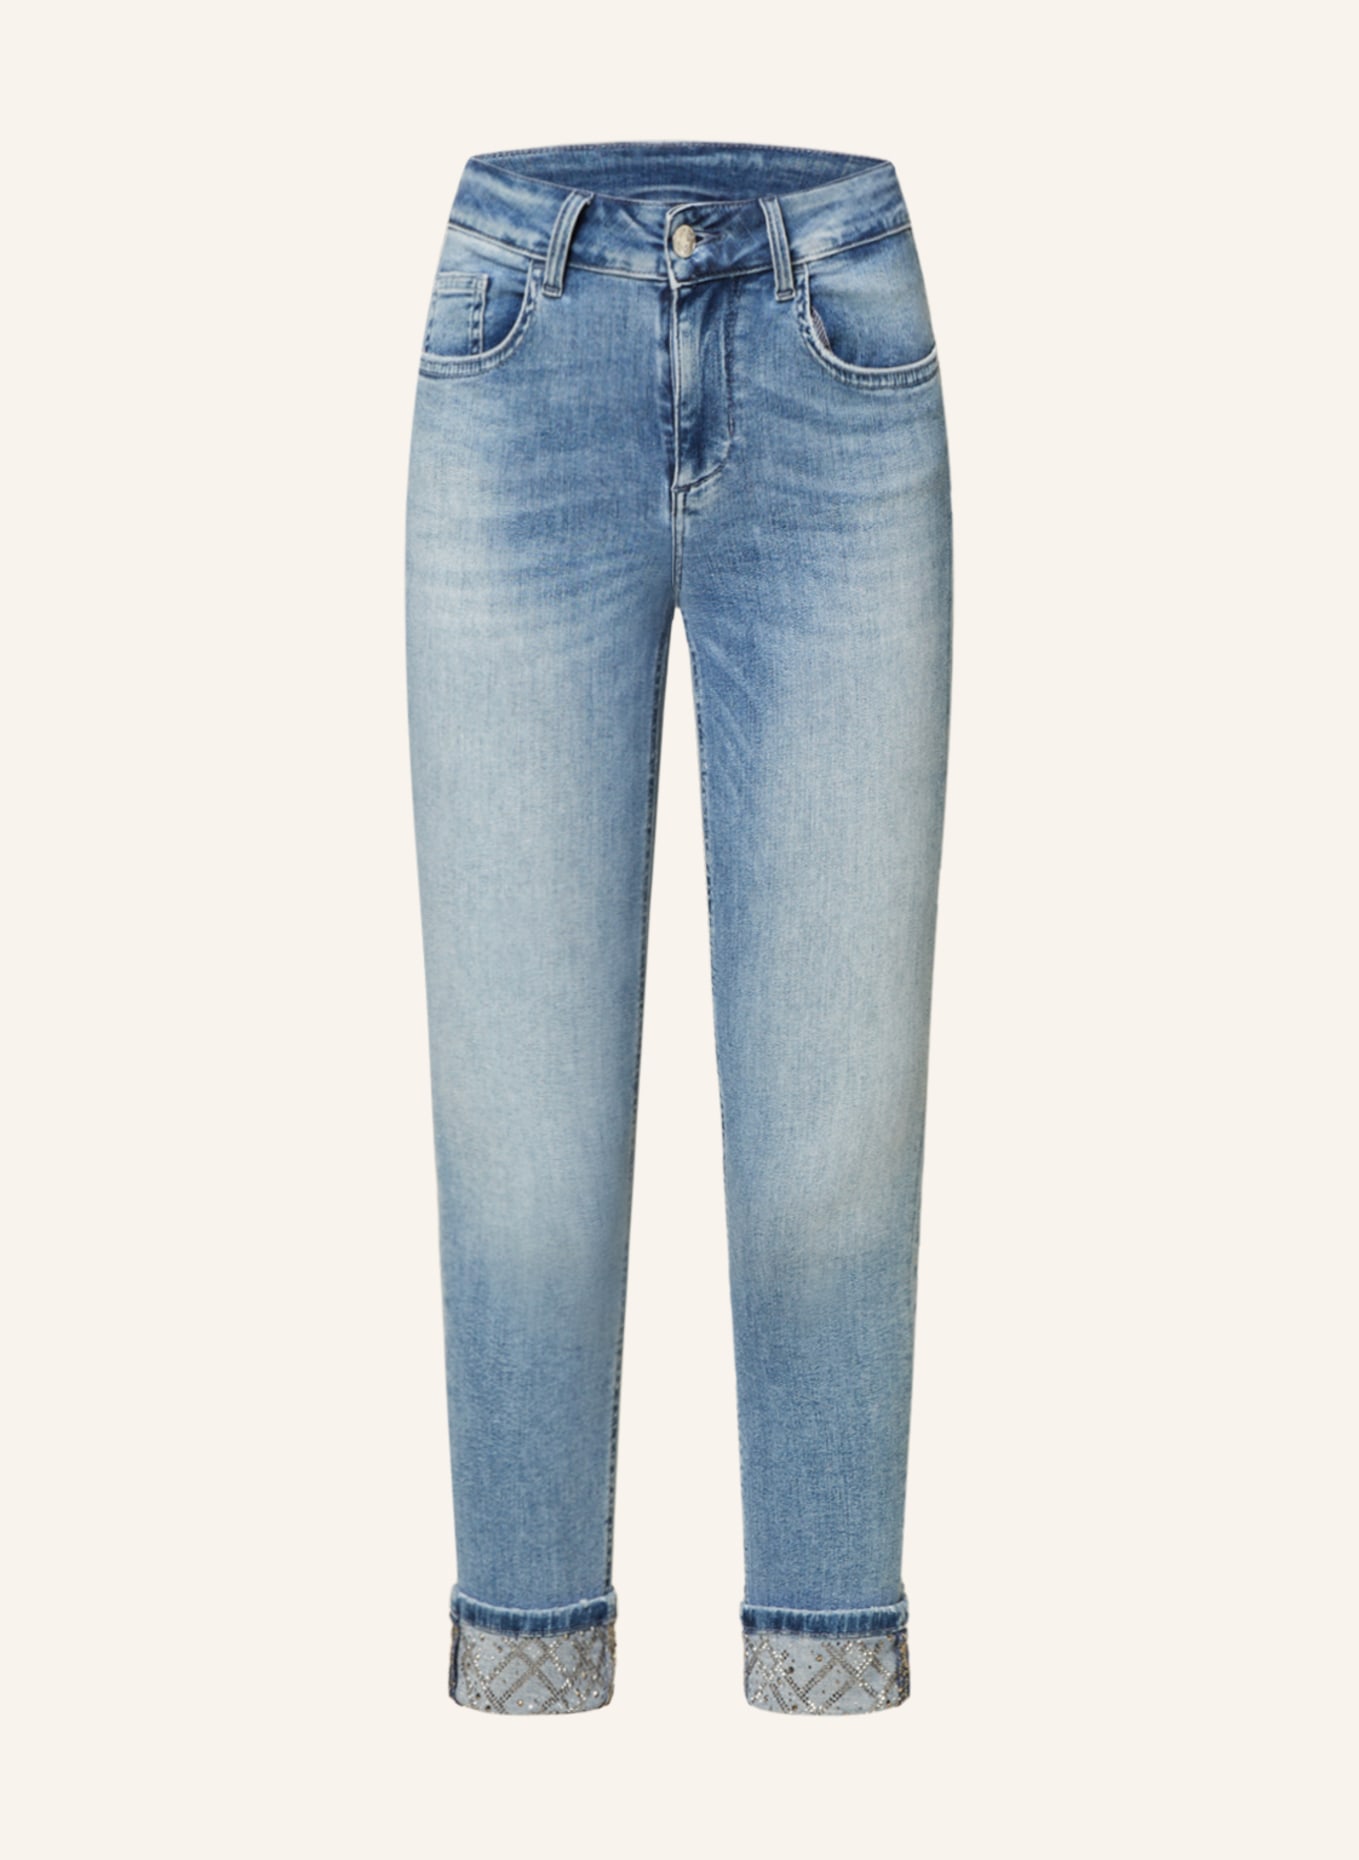 LIU JO 7/8 jeans with decorative gems, Color: 78691 Den.Blue lt summer w (Image 1)